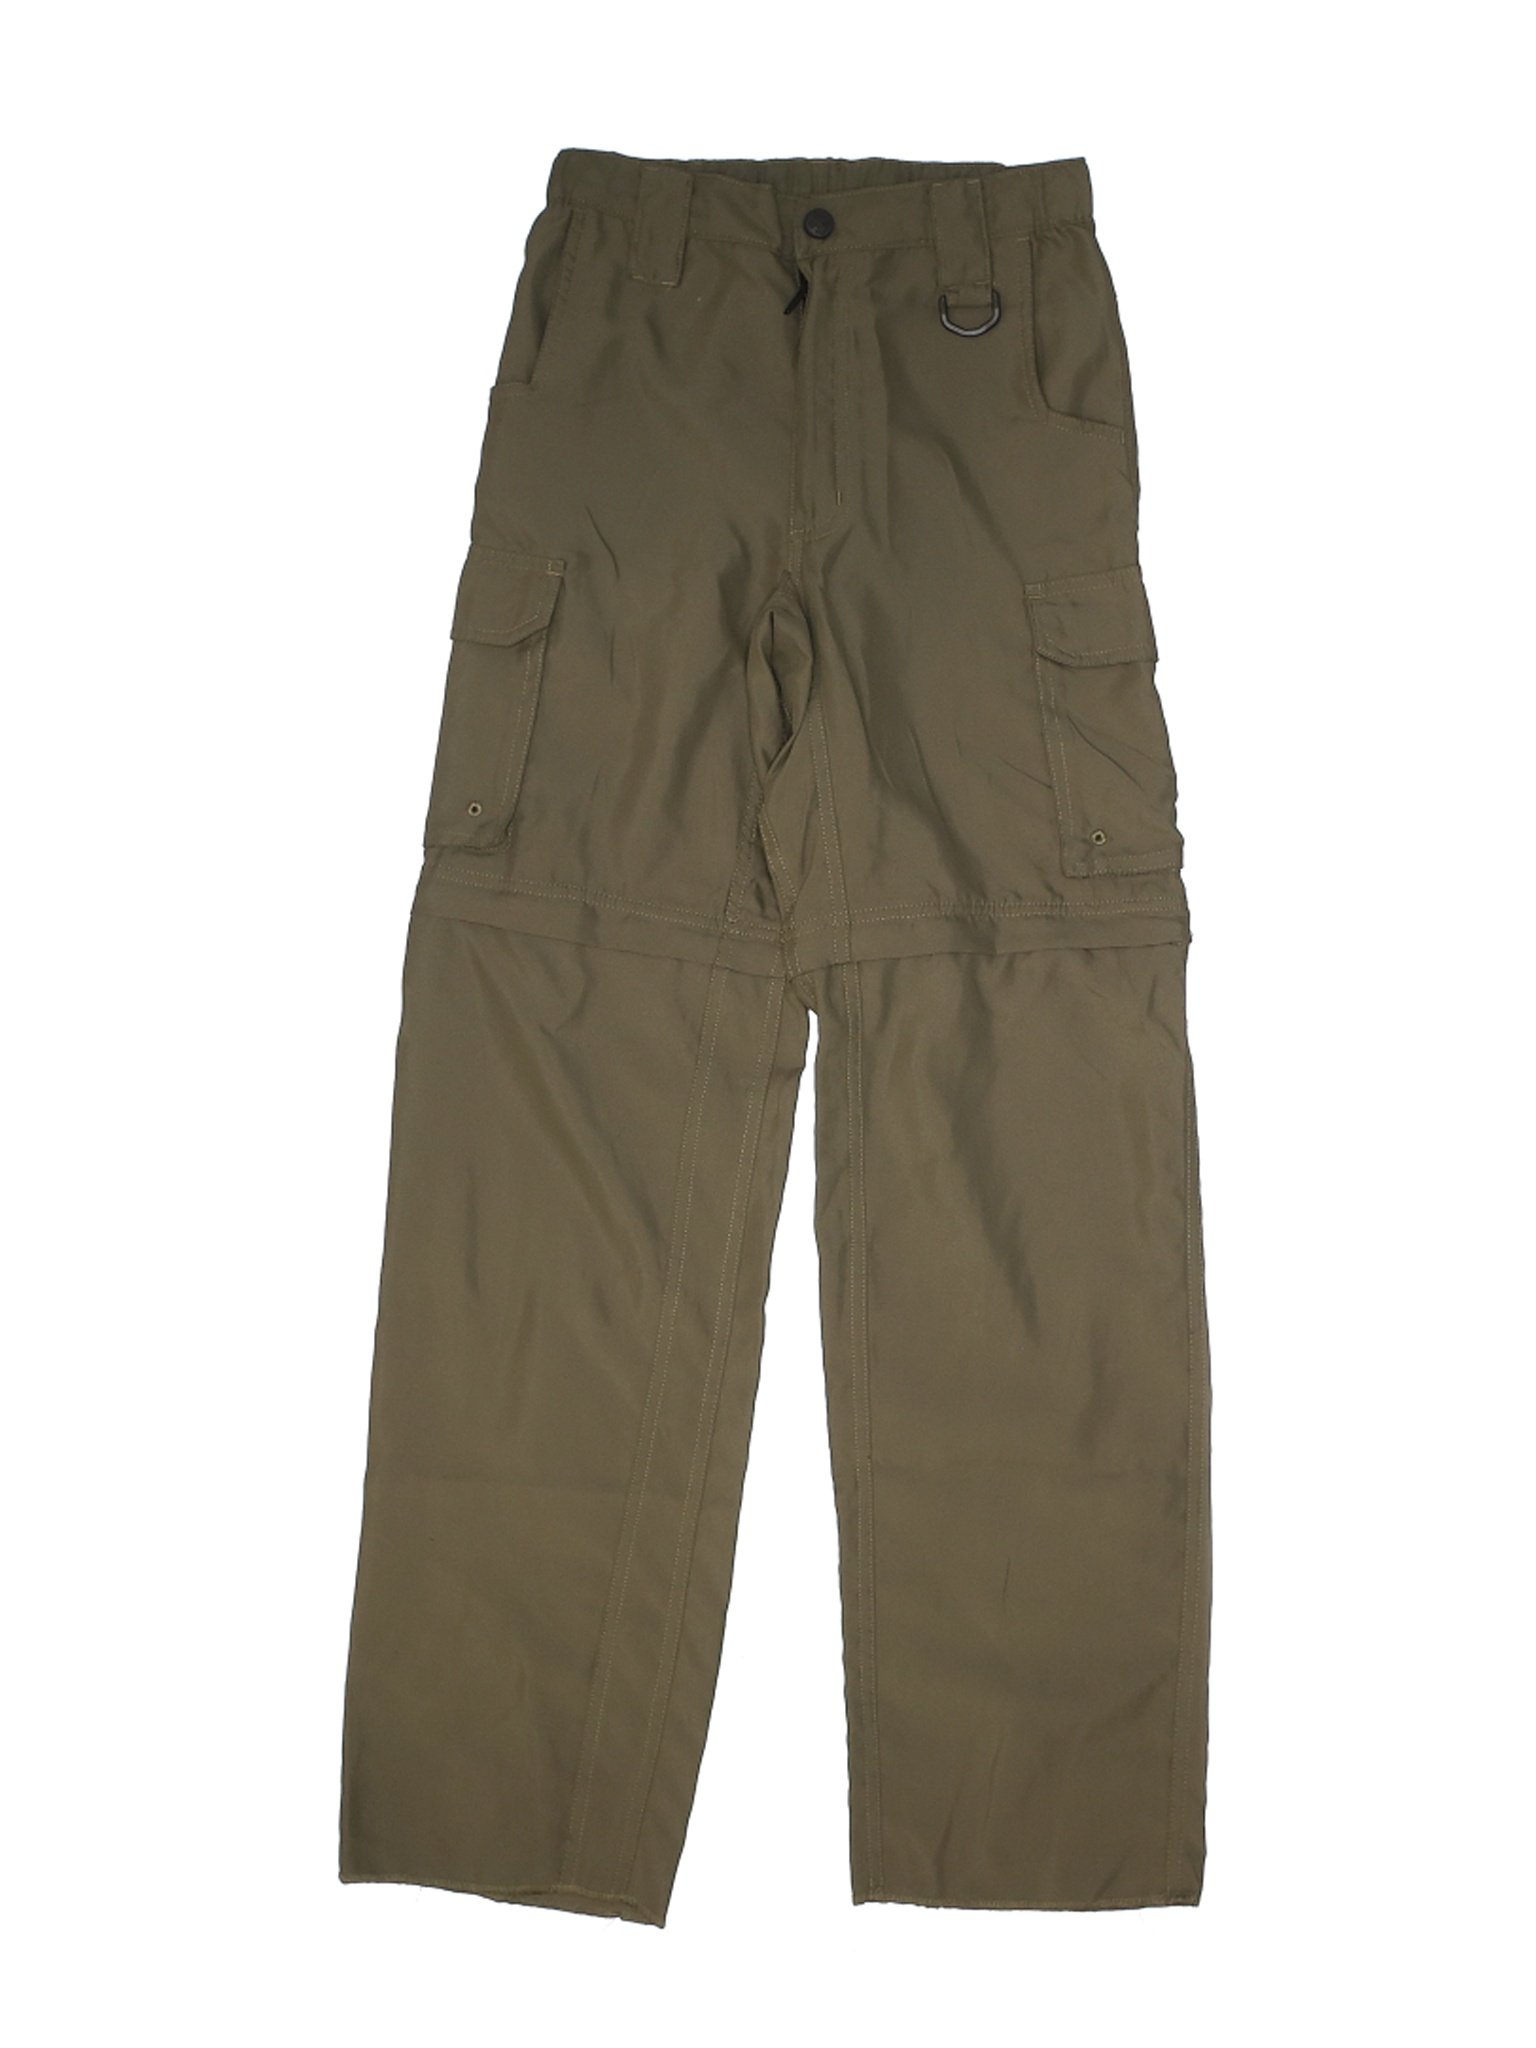 Boy Scouts of America Boys Green Cargo Pants M Youth | eBay